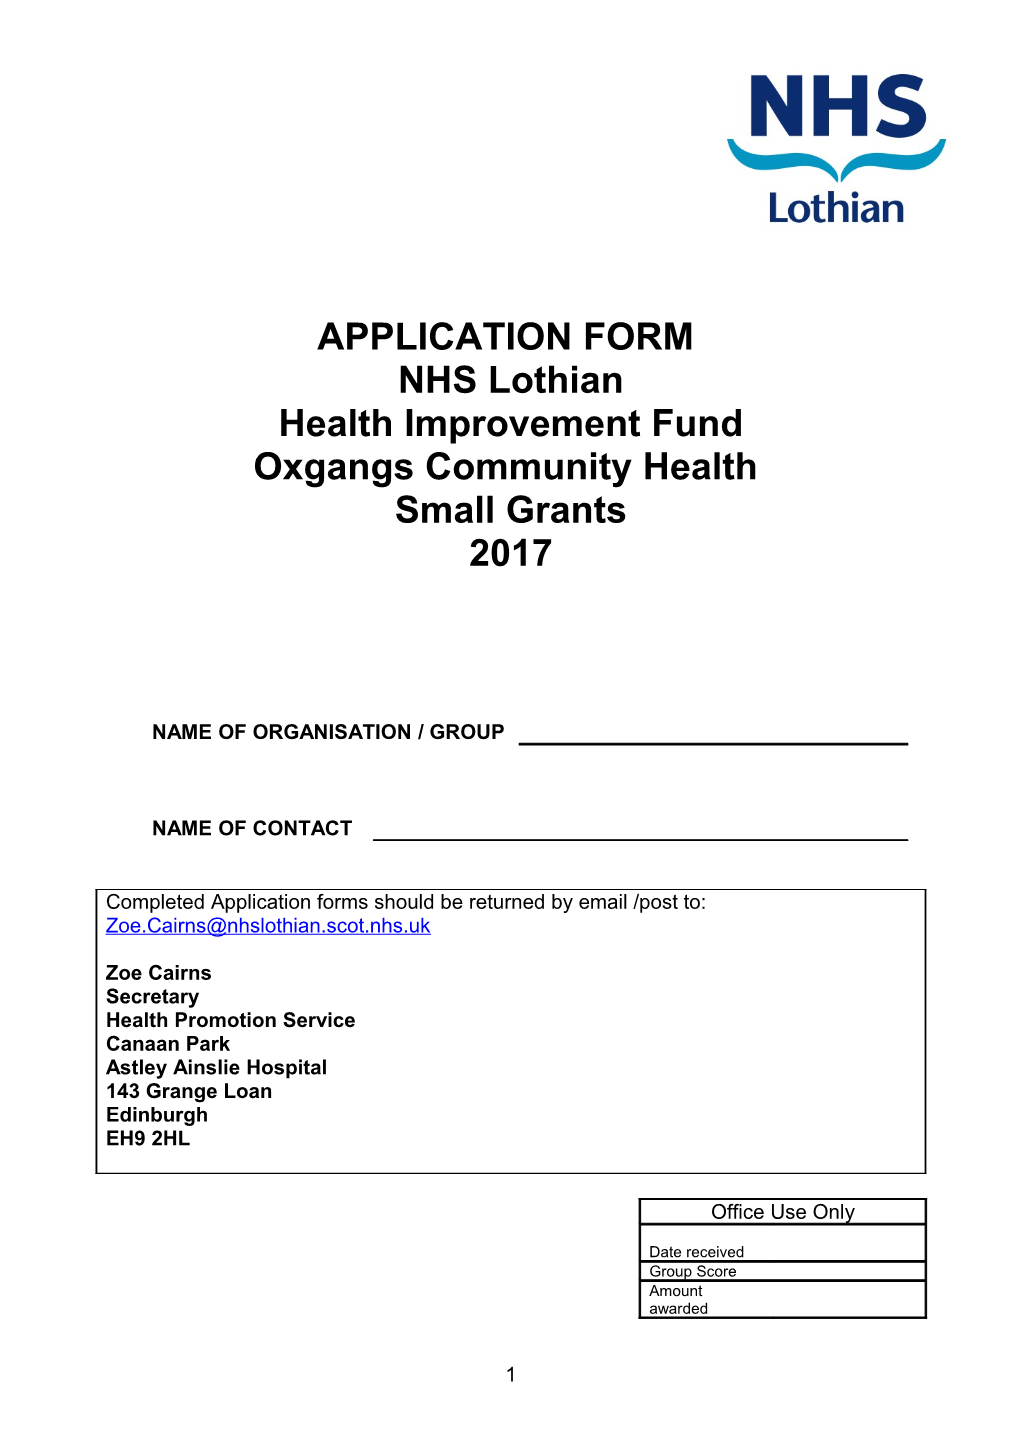 West Lothian Community Health Network